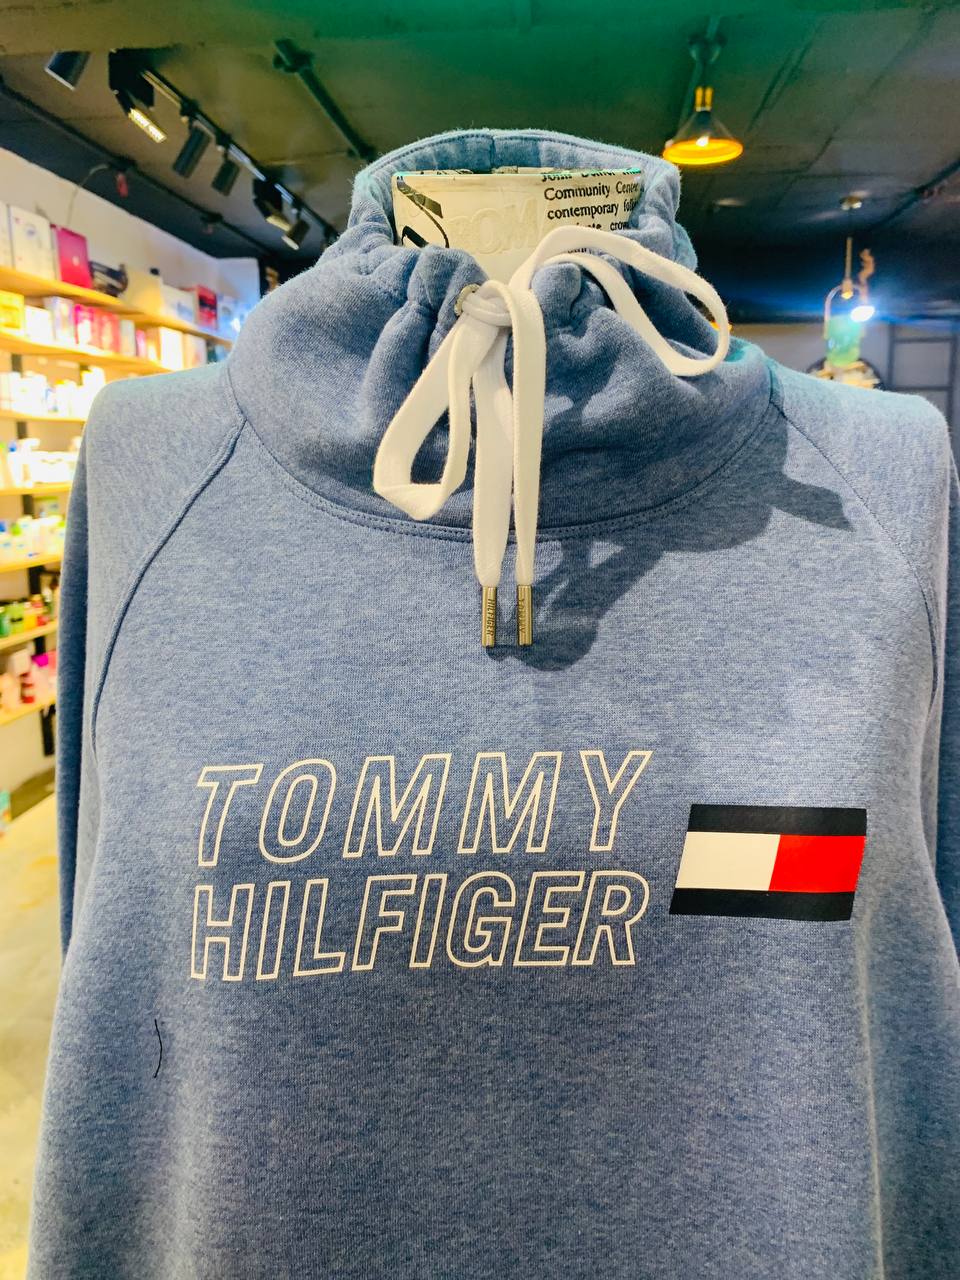 Tommy Hilfiger sweater